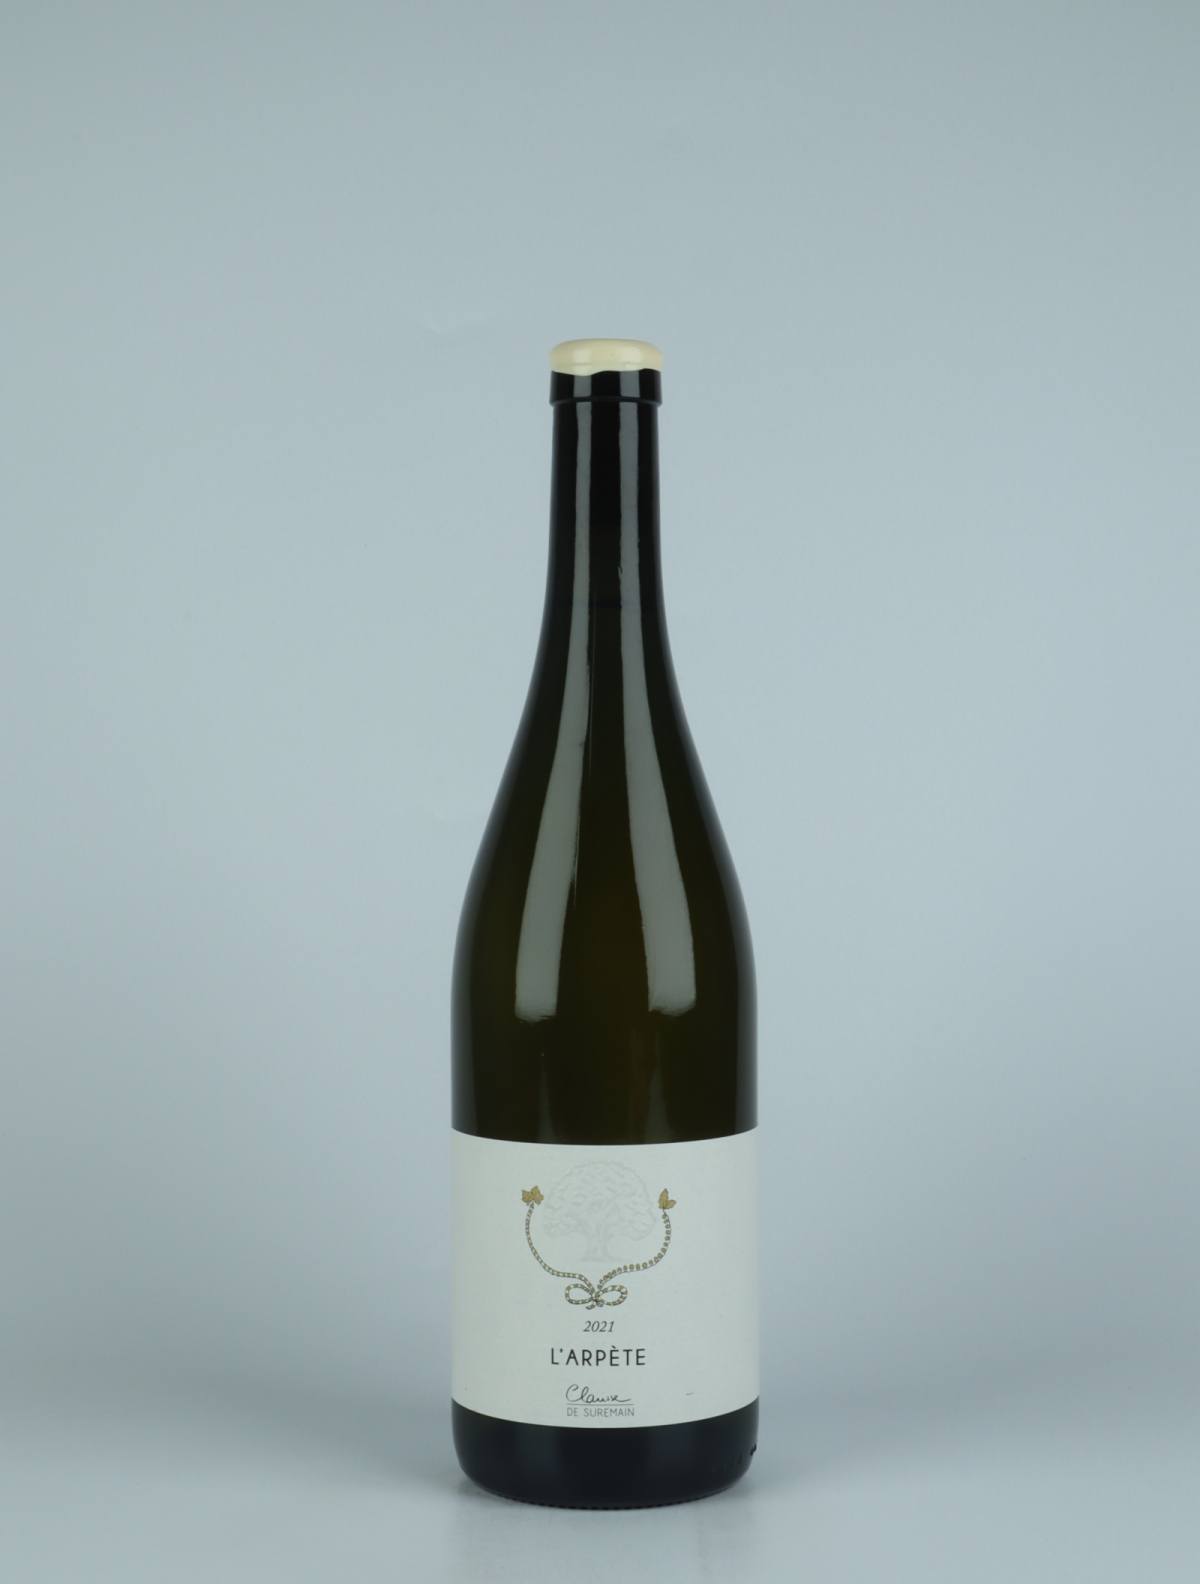 A bottle 2021 L'Arpète White wine from Clarisse de Suremain, Burgundy in France